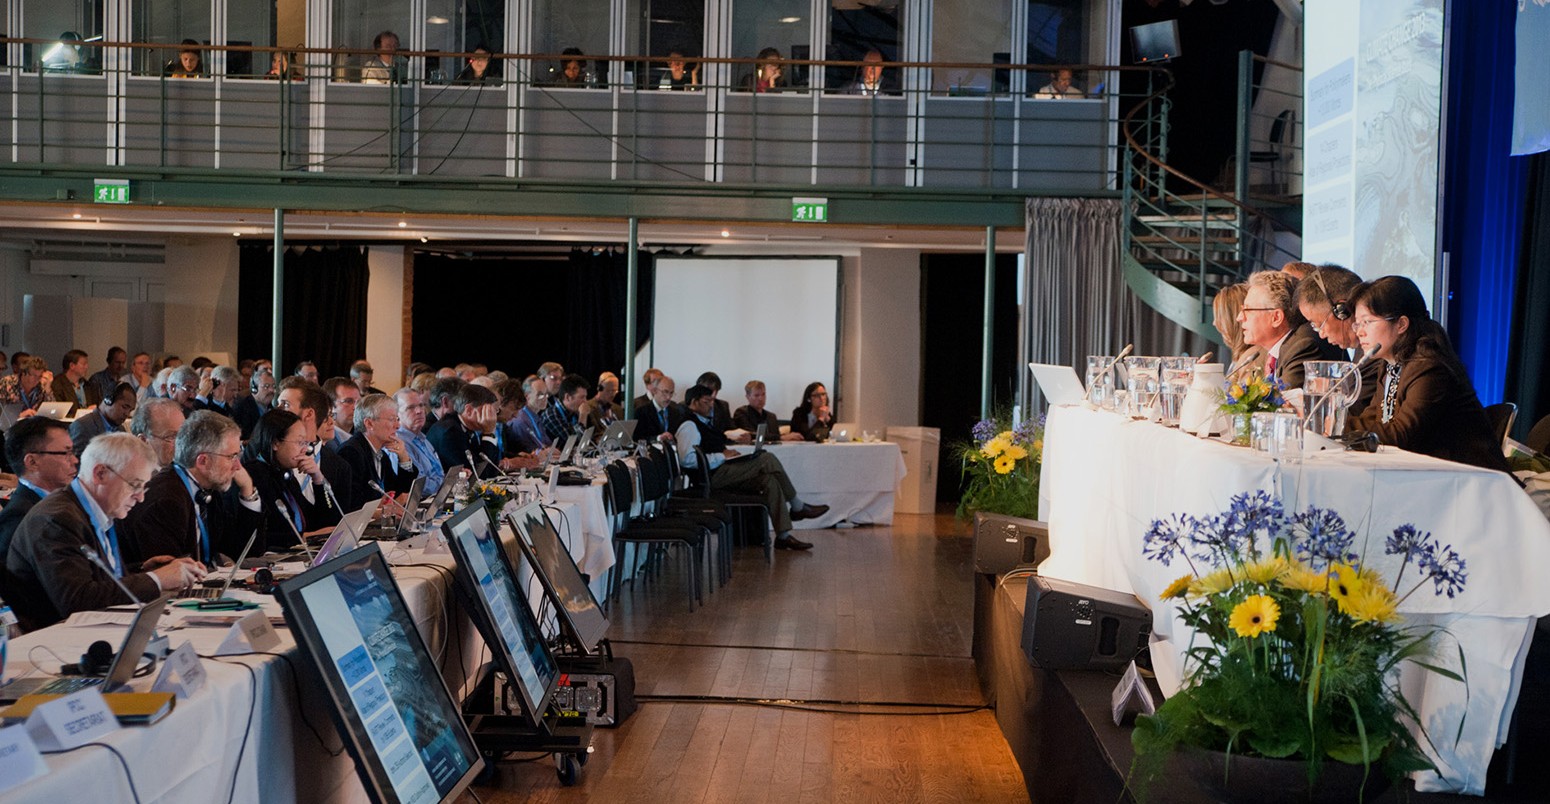 IPCC meeting, Stockholm, 2013.